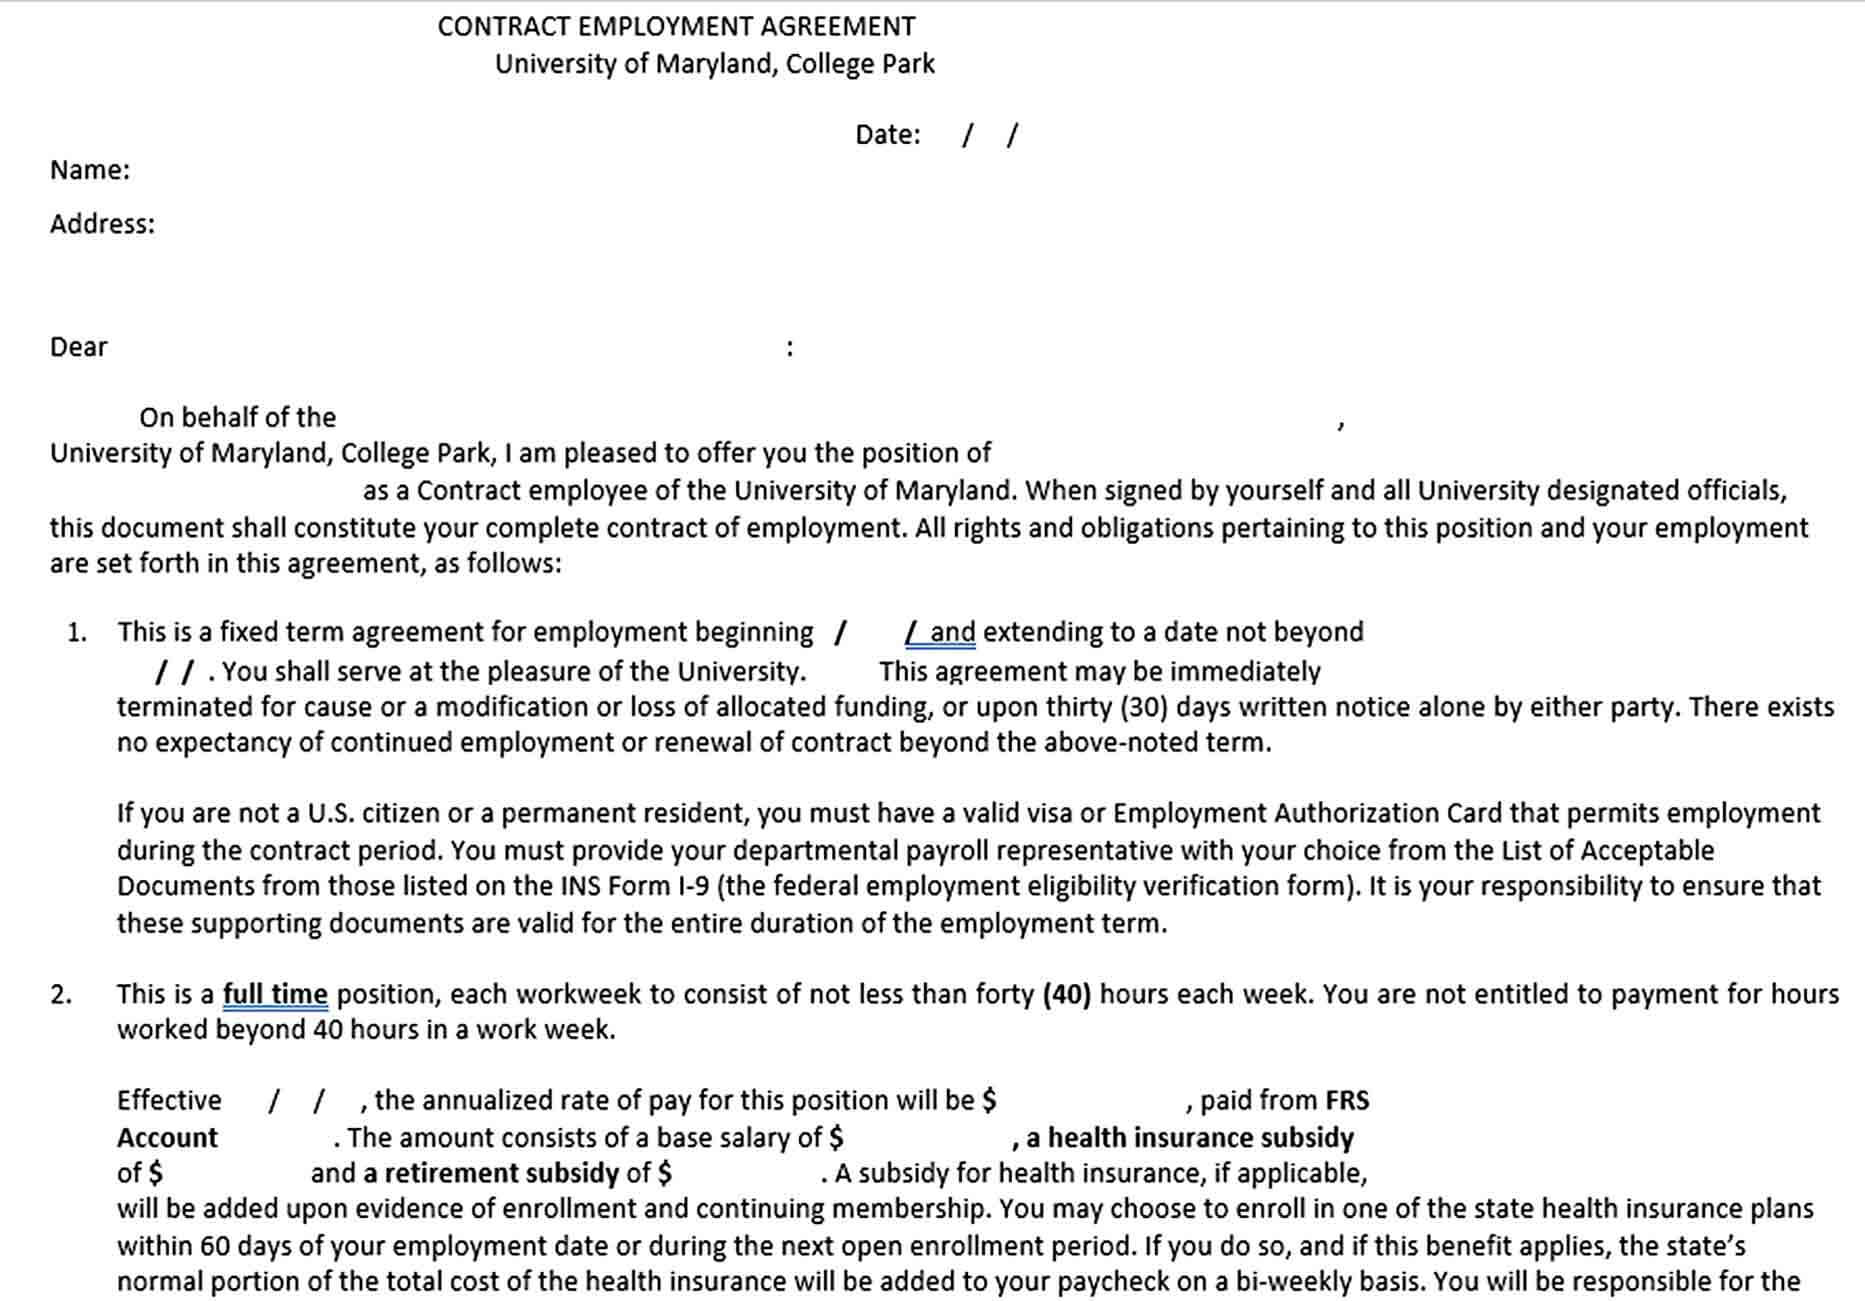 Sample Contract Employement Agreement